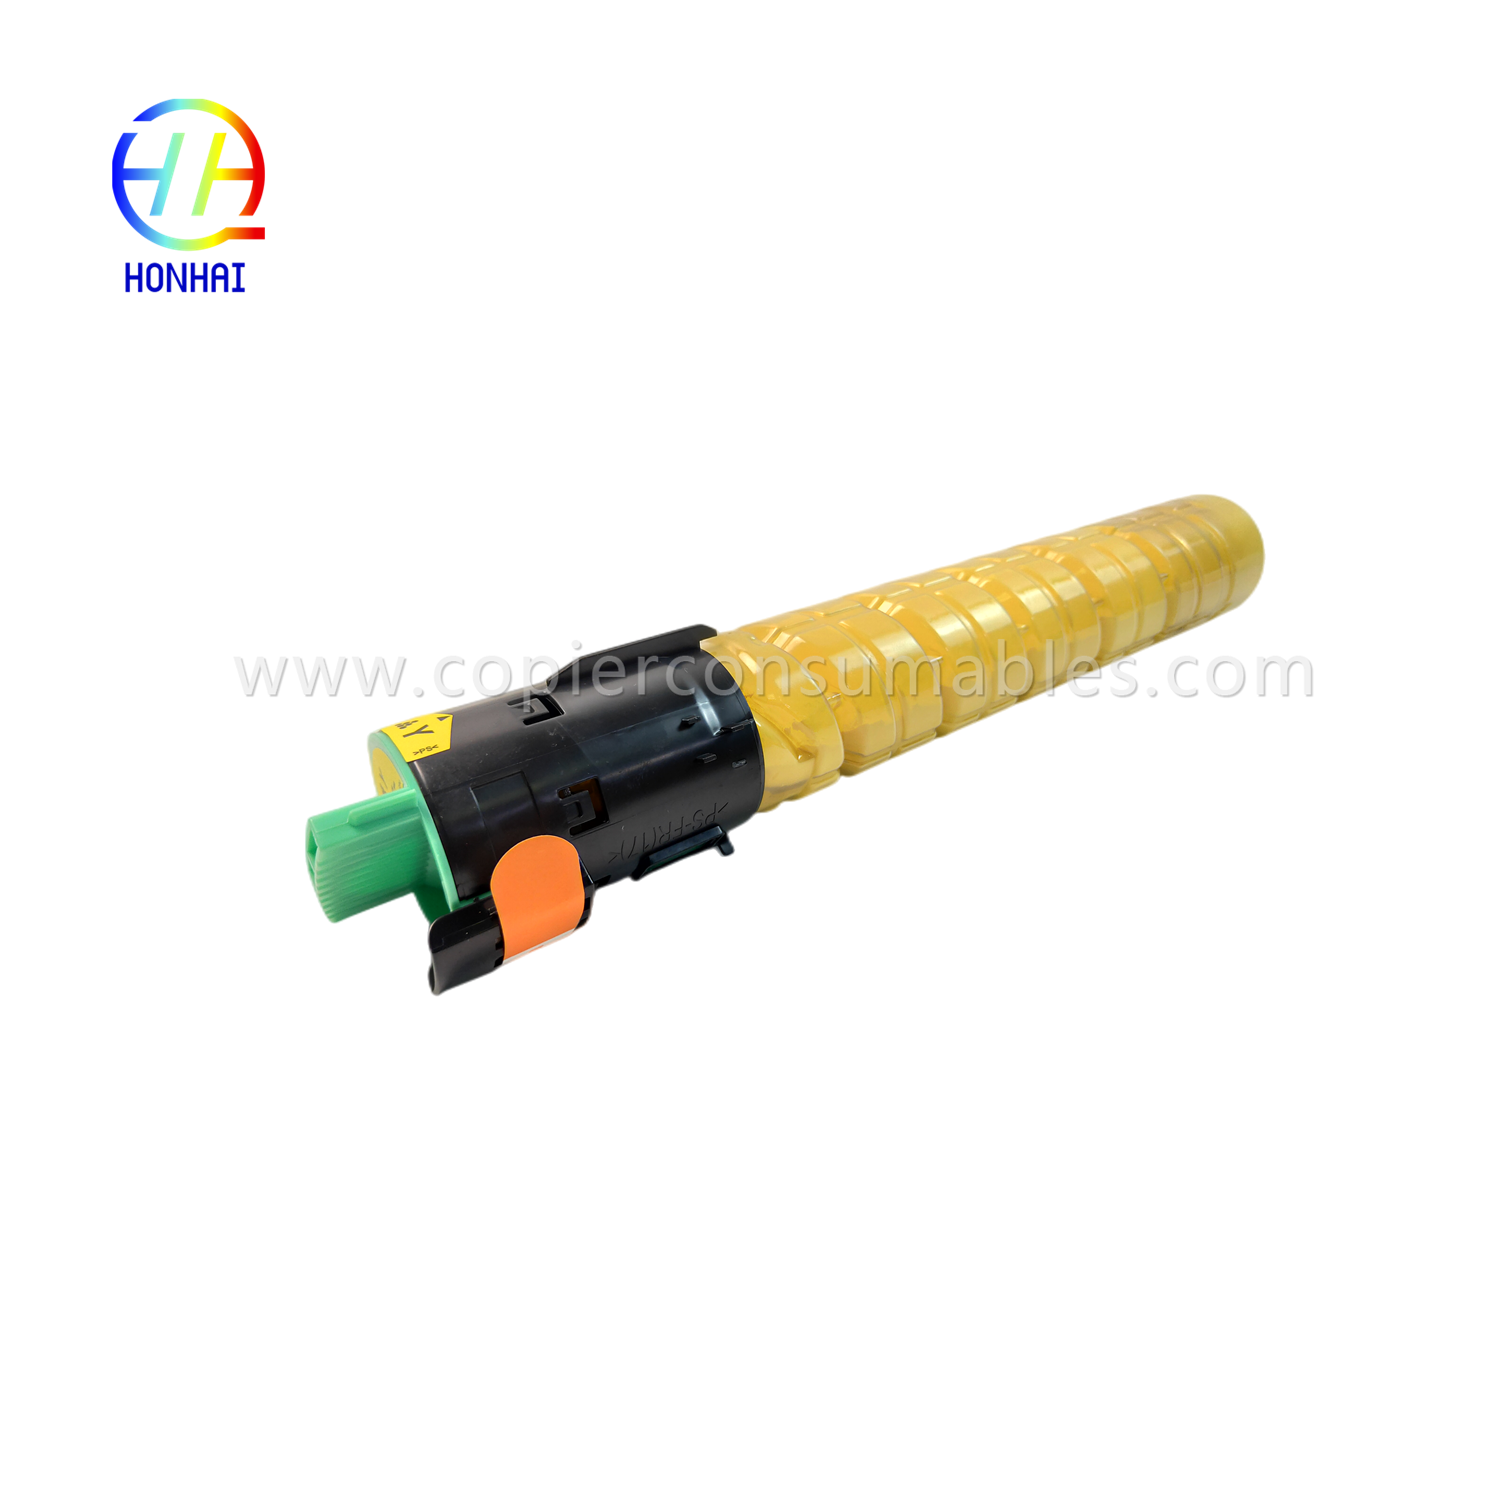 https://c585.goodao.net/toner-cartridge-yellow-for-ricoh-aficio-mpc2051-mpc2551-841501-product/